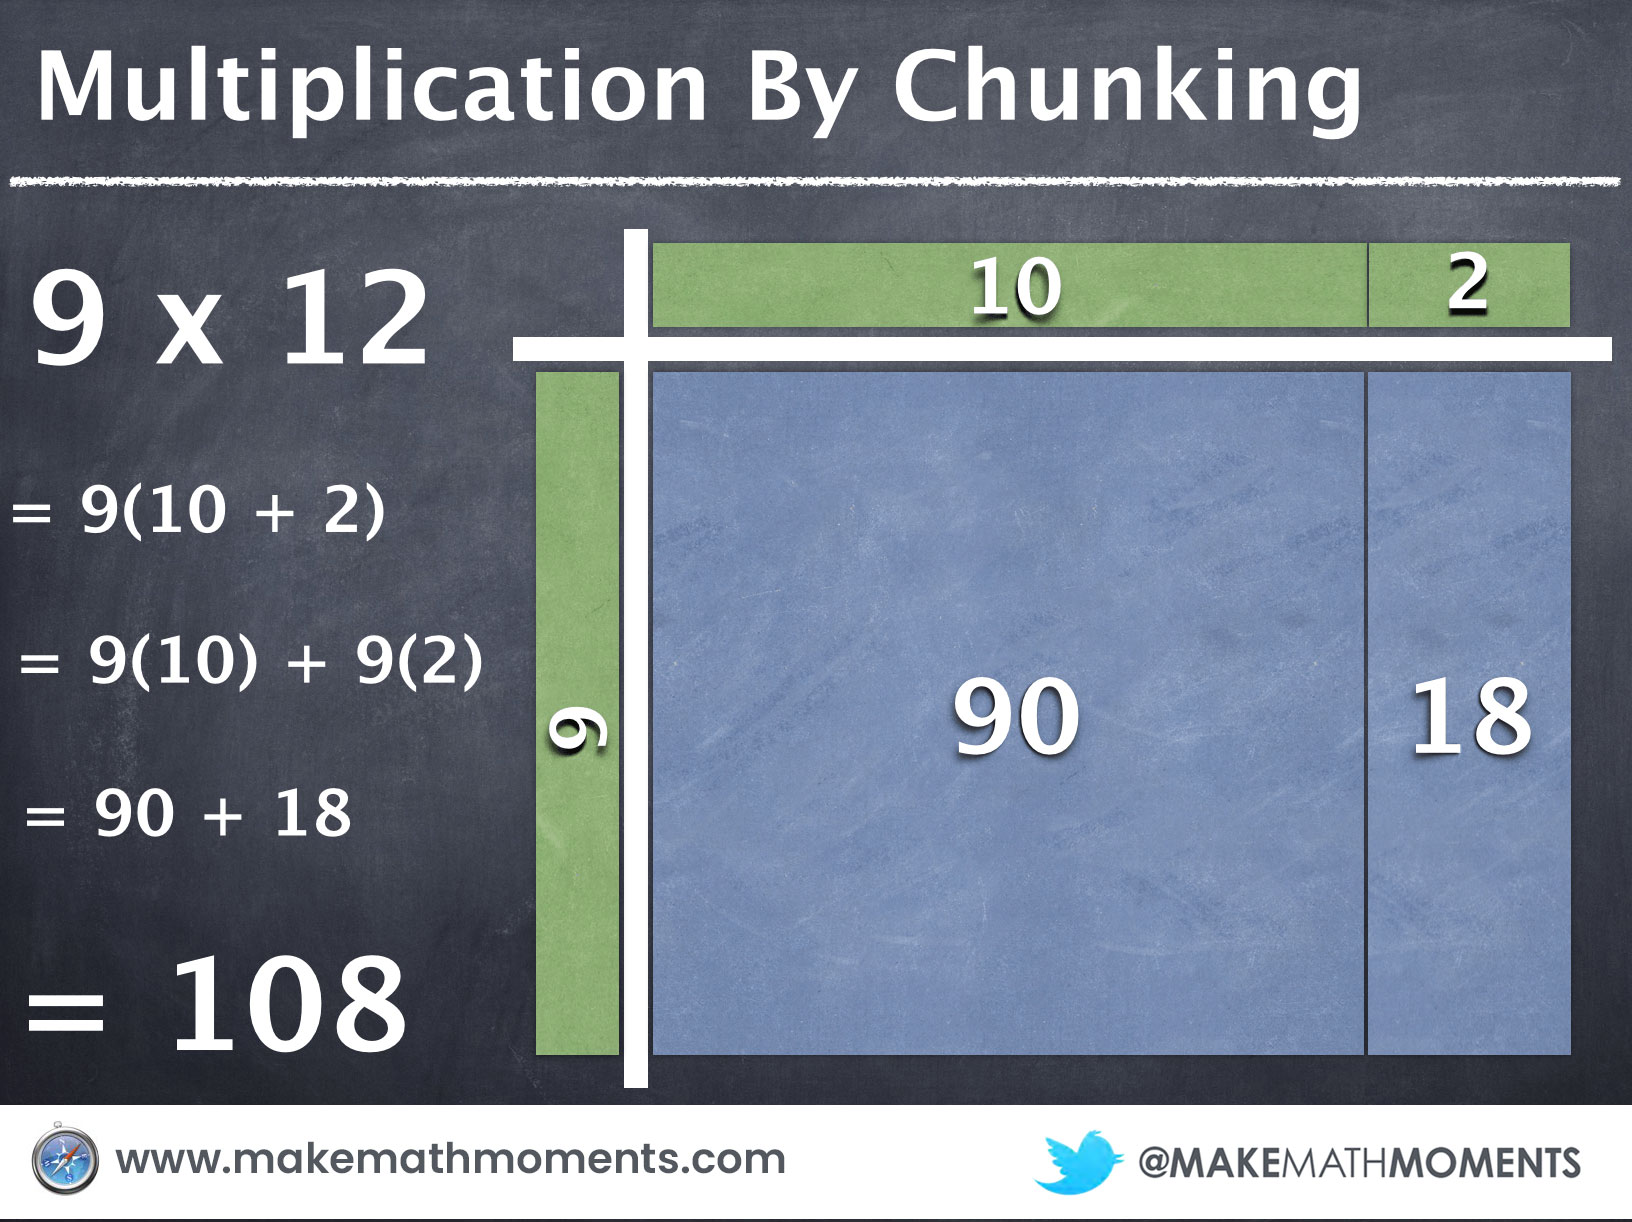 Multiplication By Chunking - 12 x 9 = 9x10 + 9x2